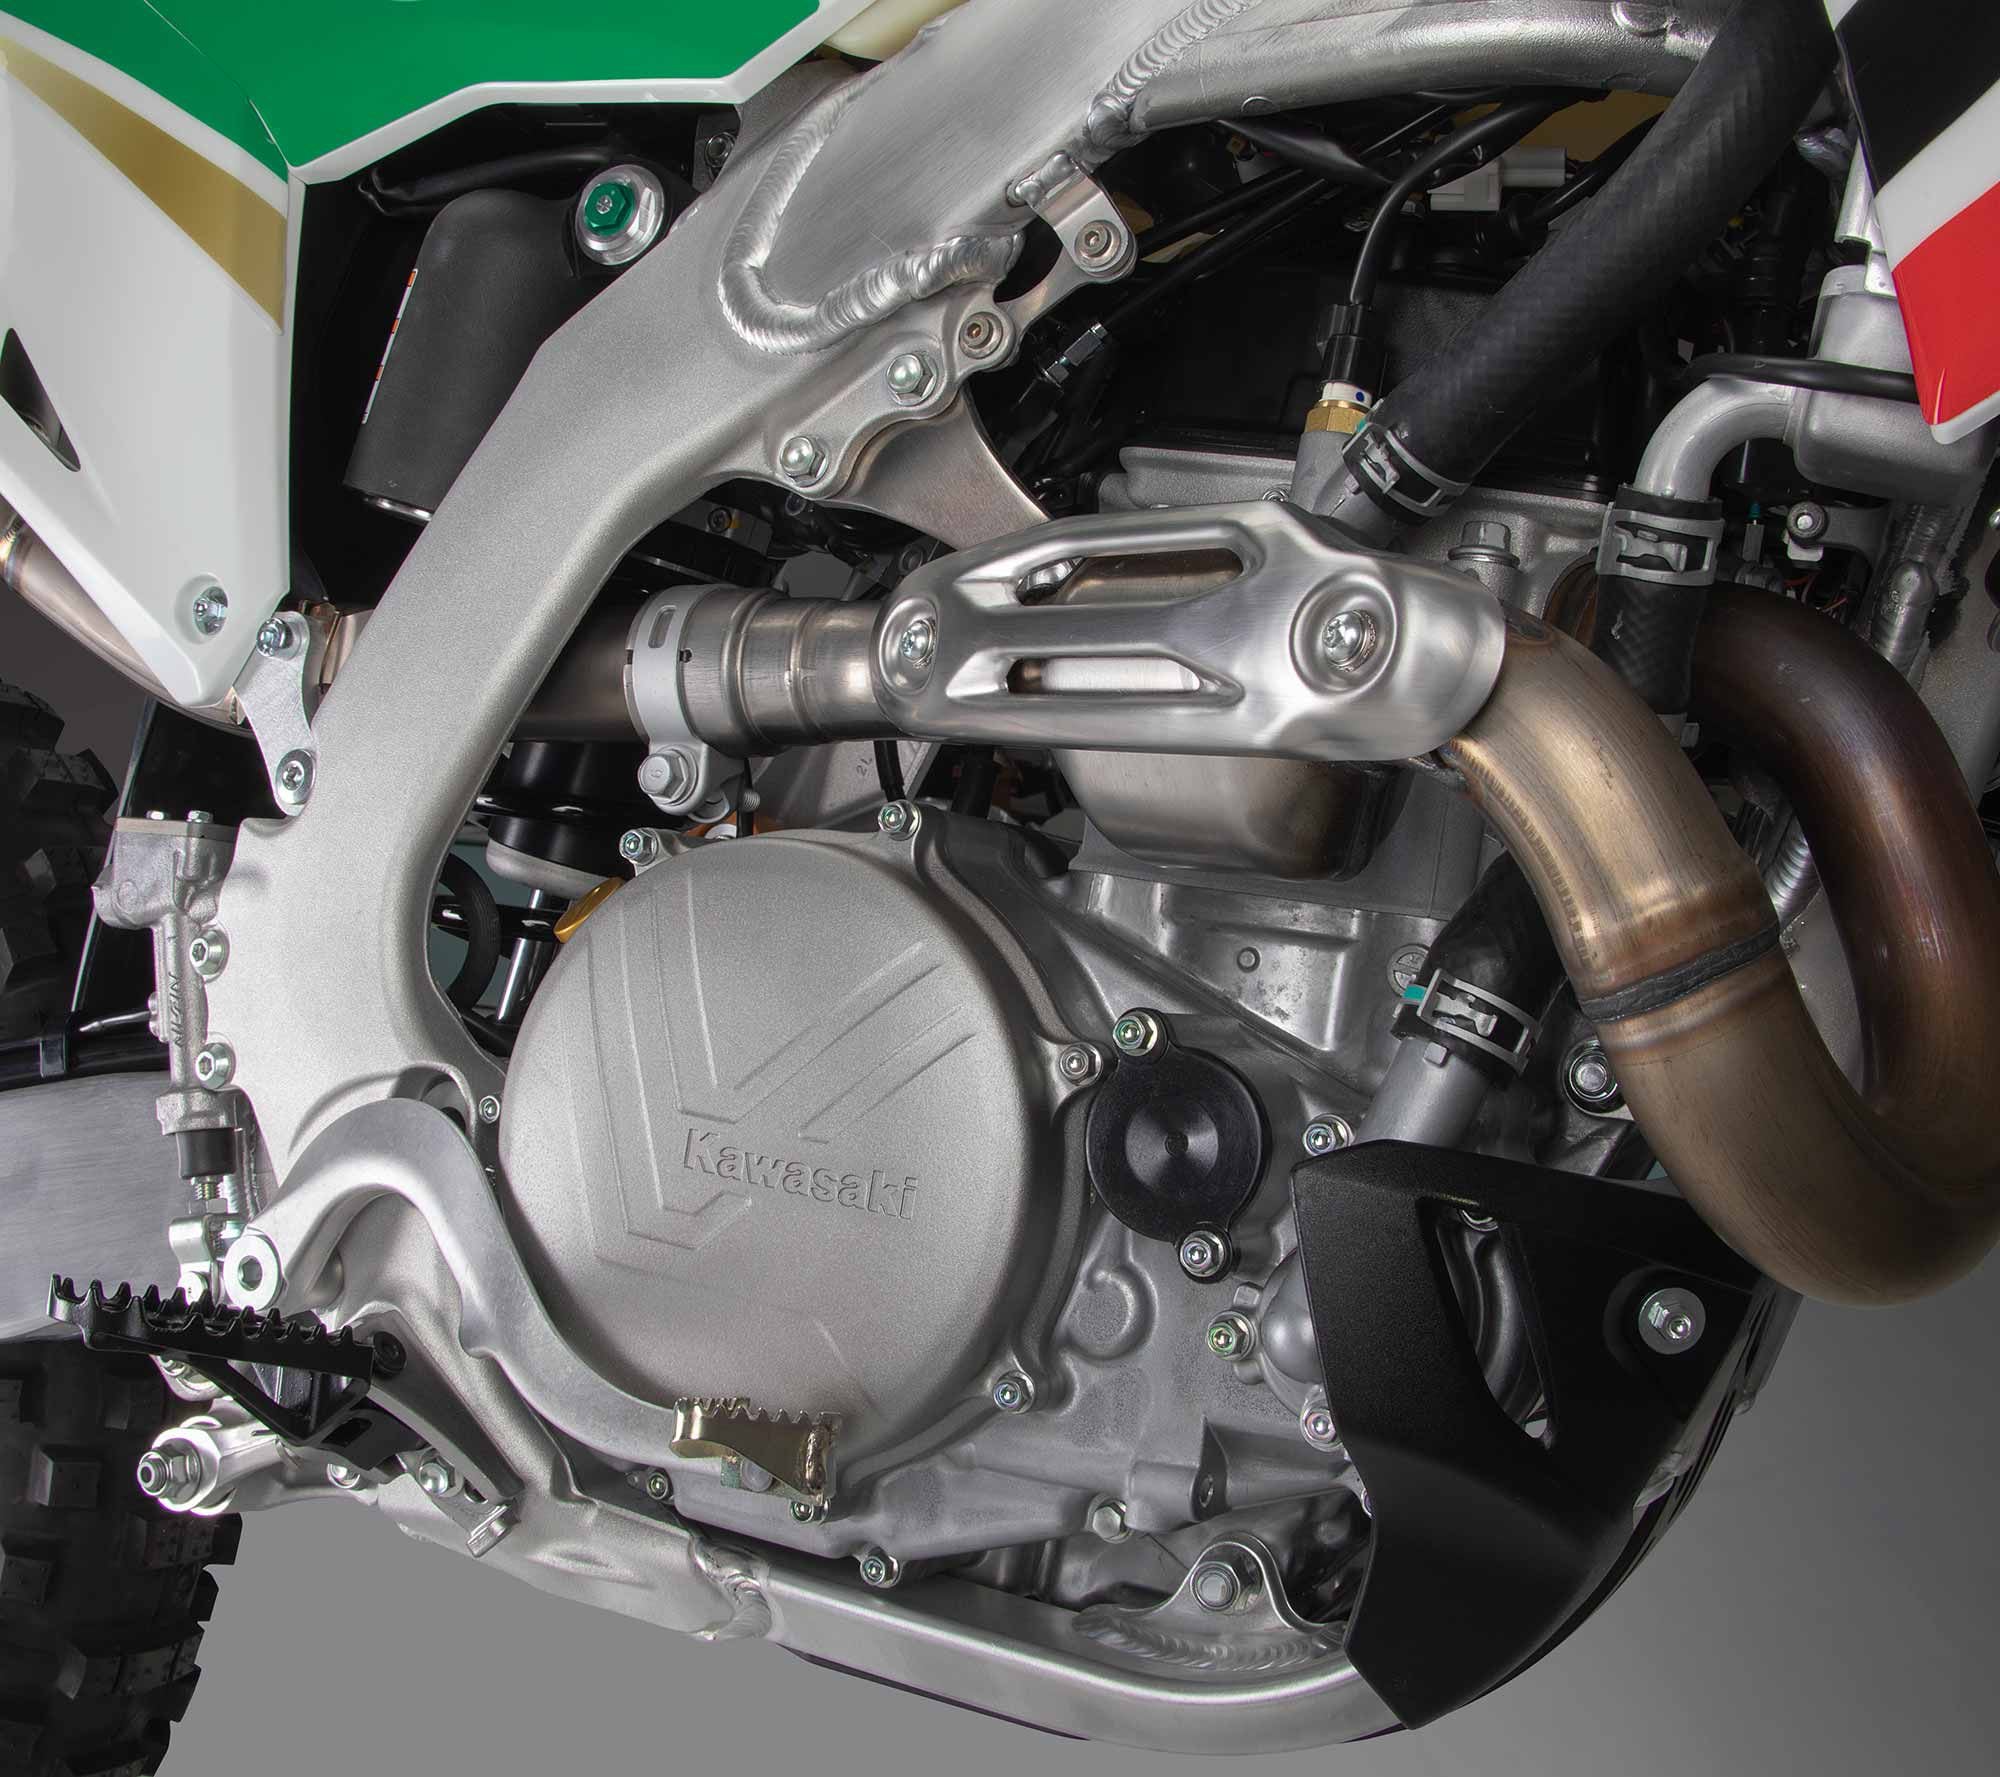 While retaining Kawasaki’s frame, the Bimota BX450’s engine gets a new, Bimota-specific ECU as well as an Arrow exhaust.